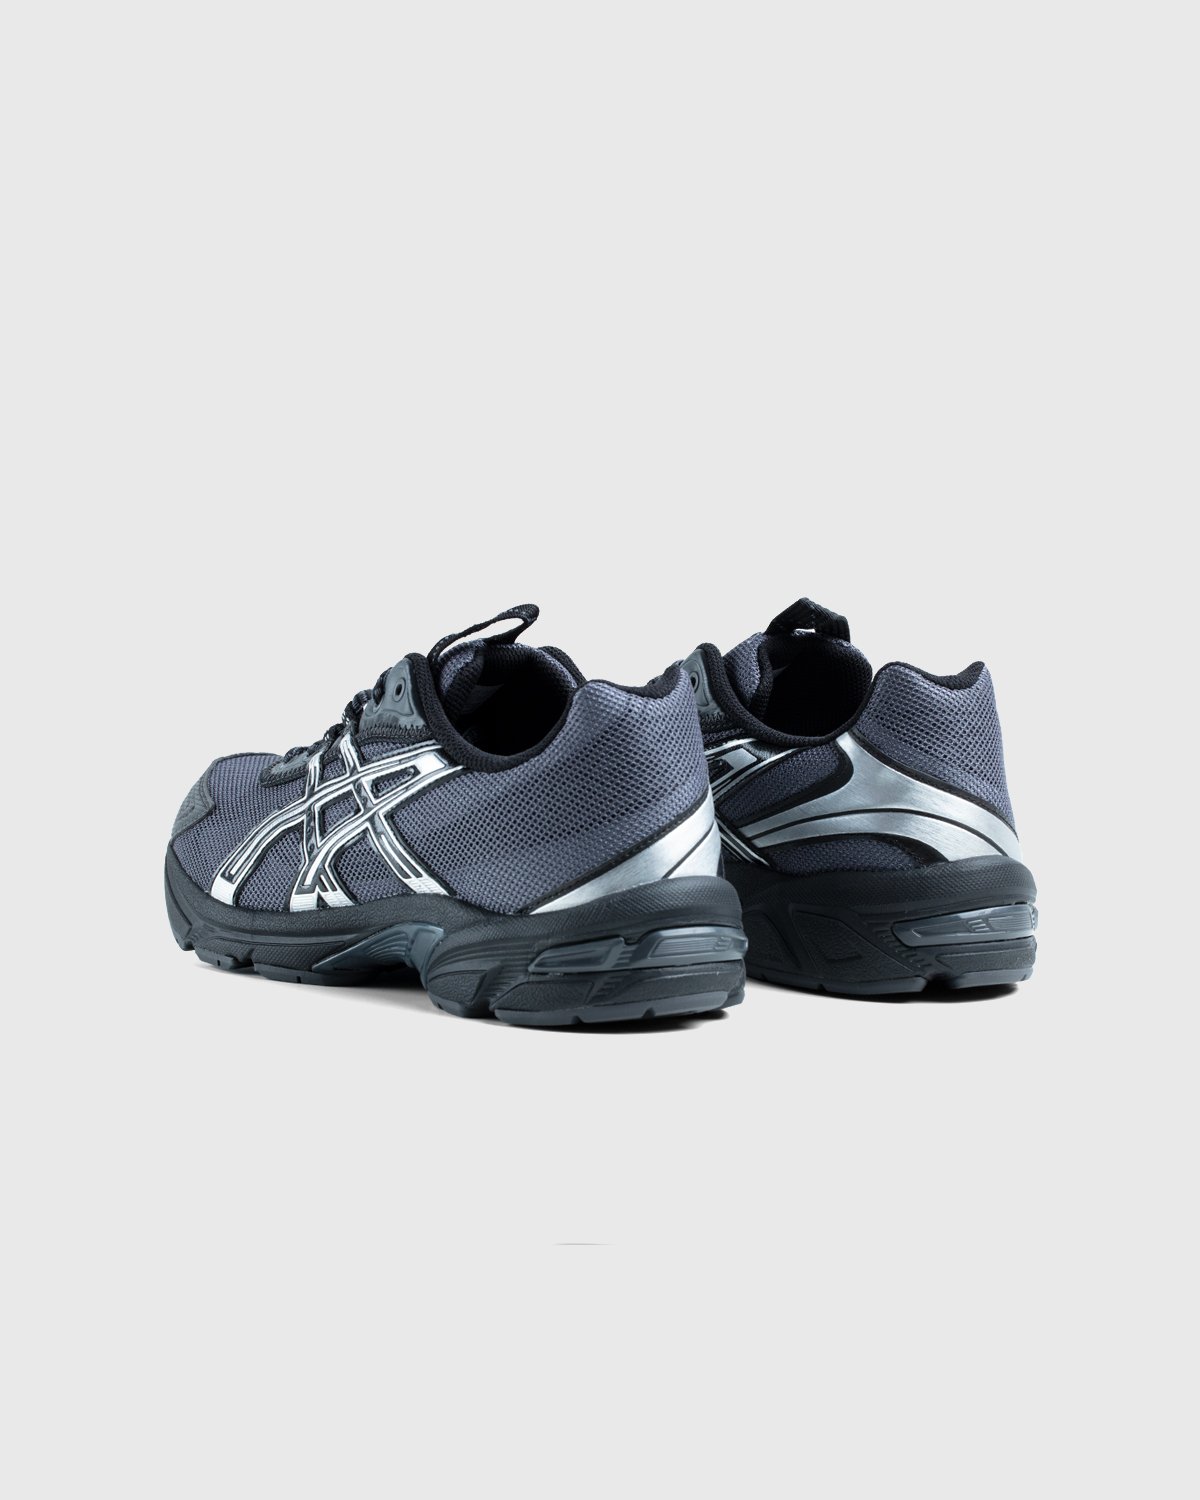 asics - UB2-S Gel-1130 Asphalt/Pure SIlver - Footwear - Grey - Image 3